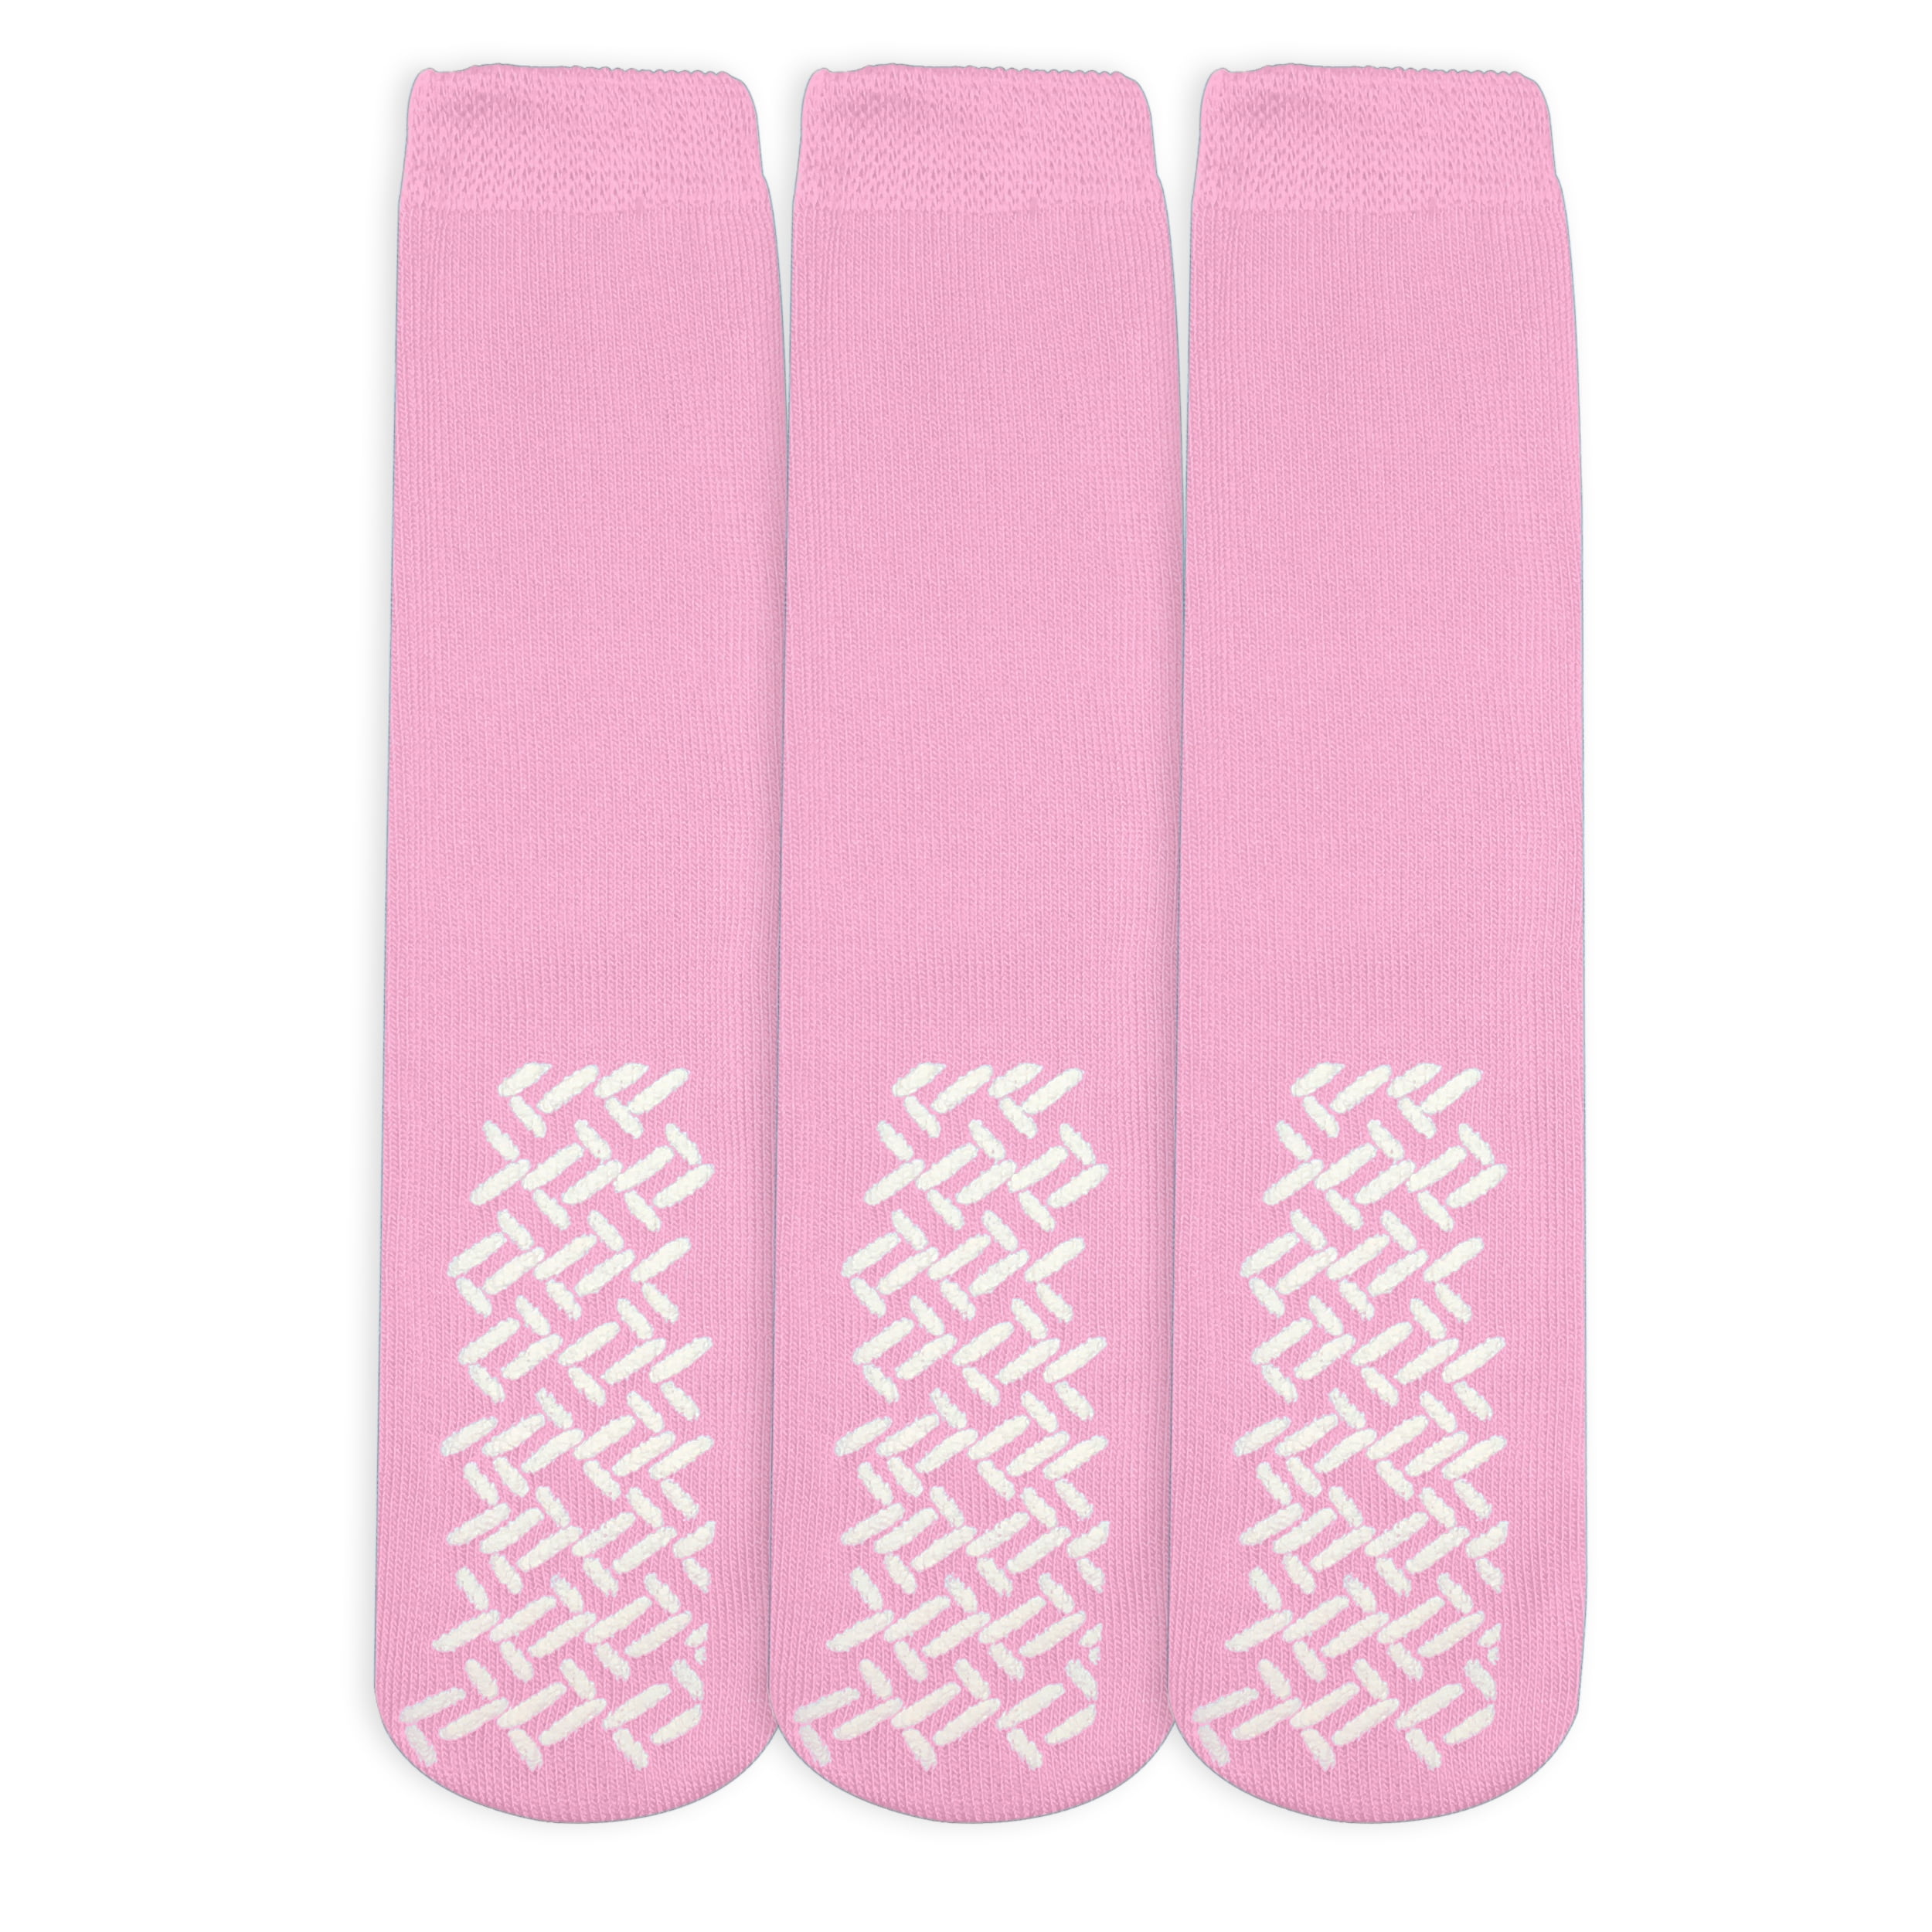 Nobles Assorted Anti Skid/ No Slip Hospital Gripper Socks